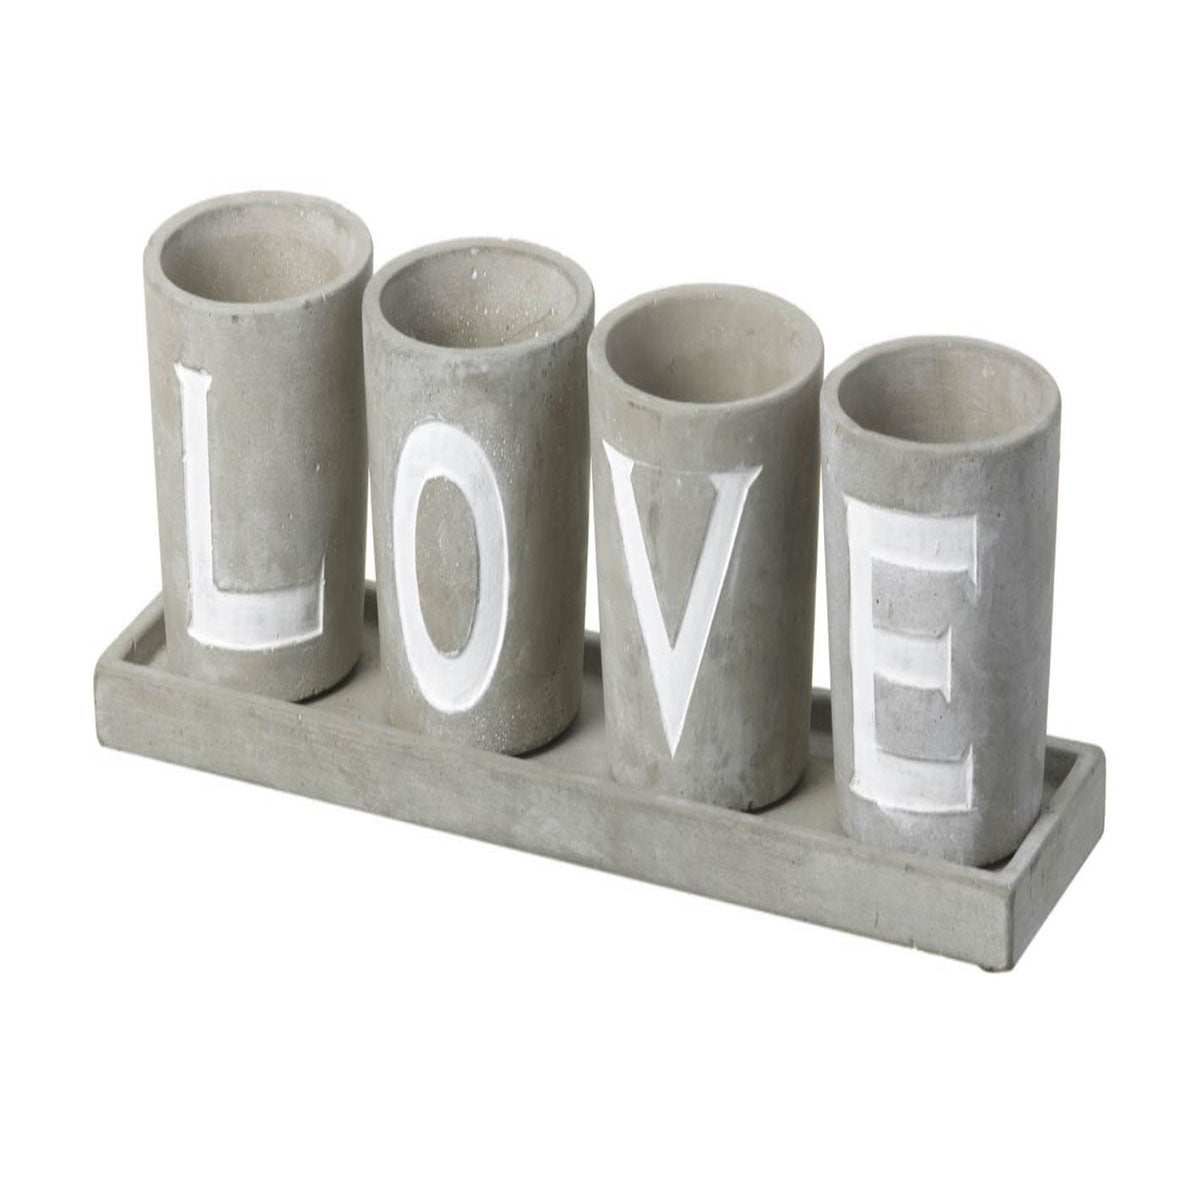 Planter Love Cement Grey set of 4